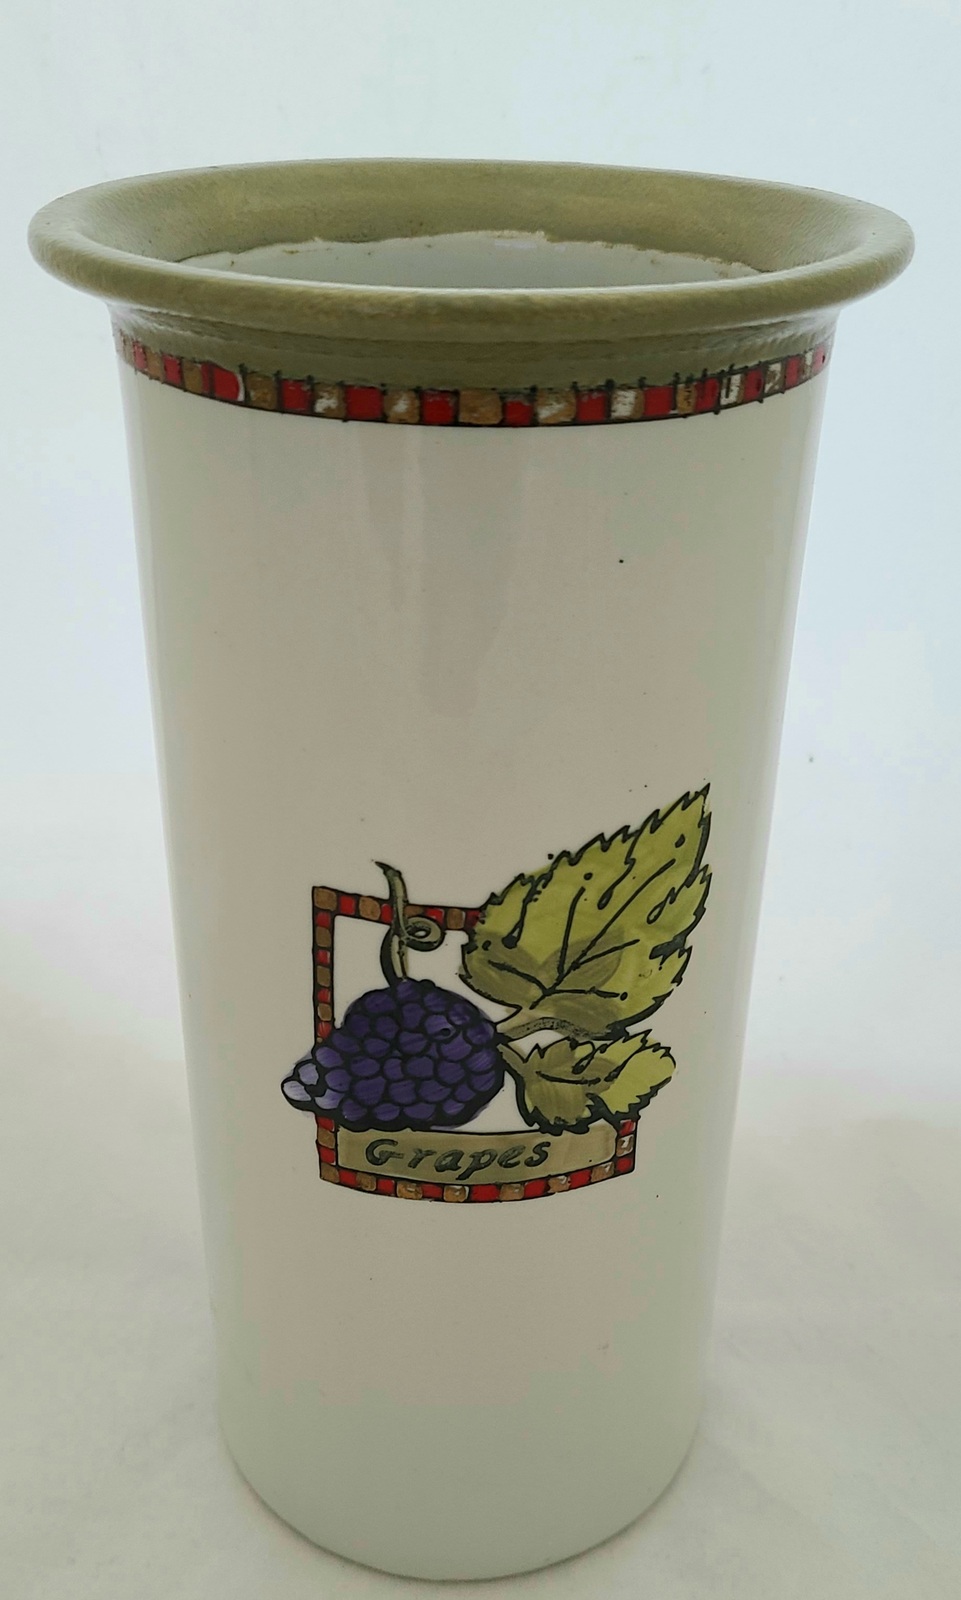 Ecco Nova Decorative Ceramic Wine Bottle Holder - $28.50